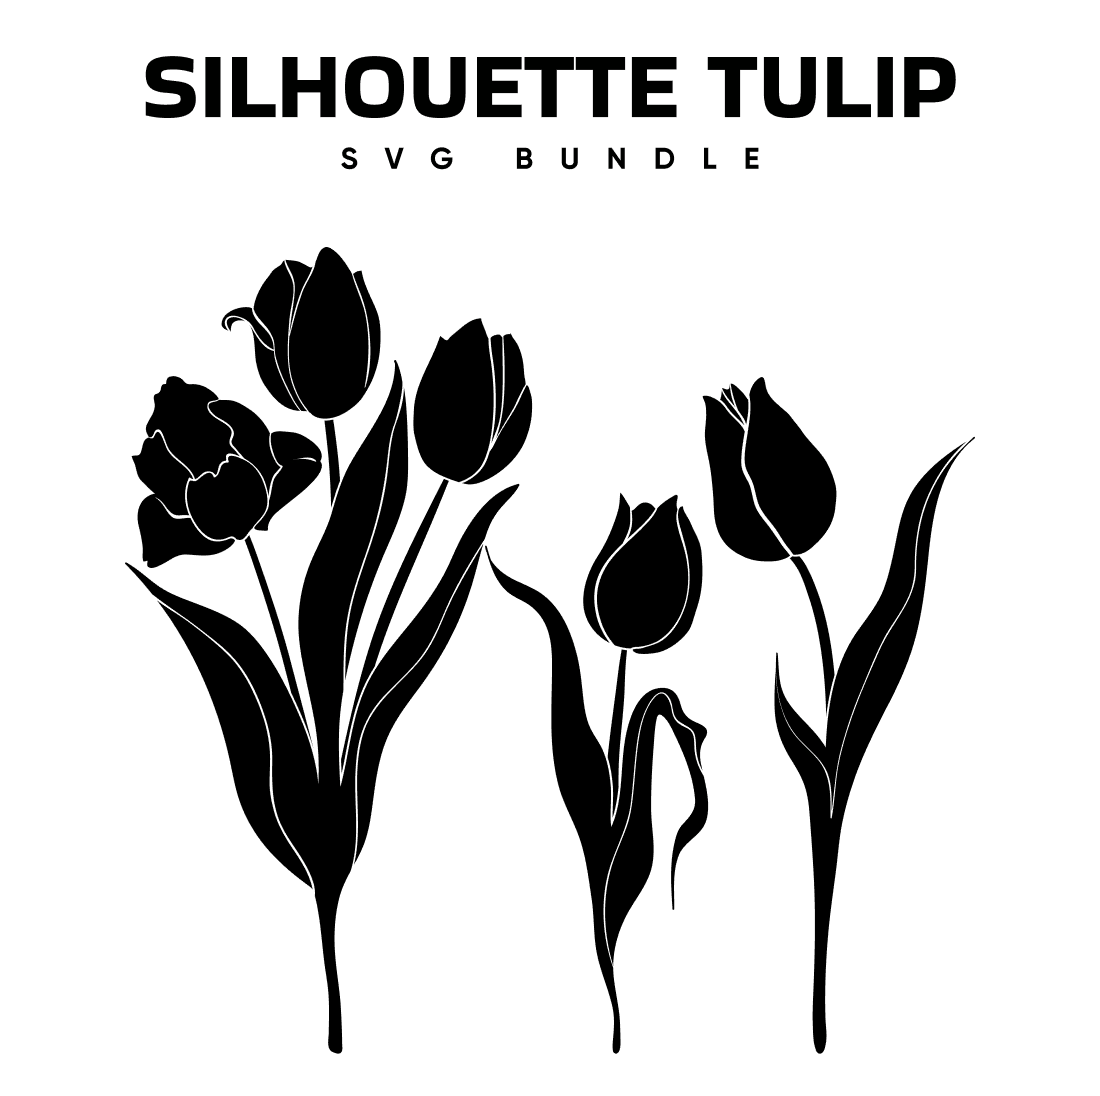 Silhouette Tulip SVG Bundle, main picture 1100x1100.